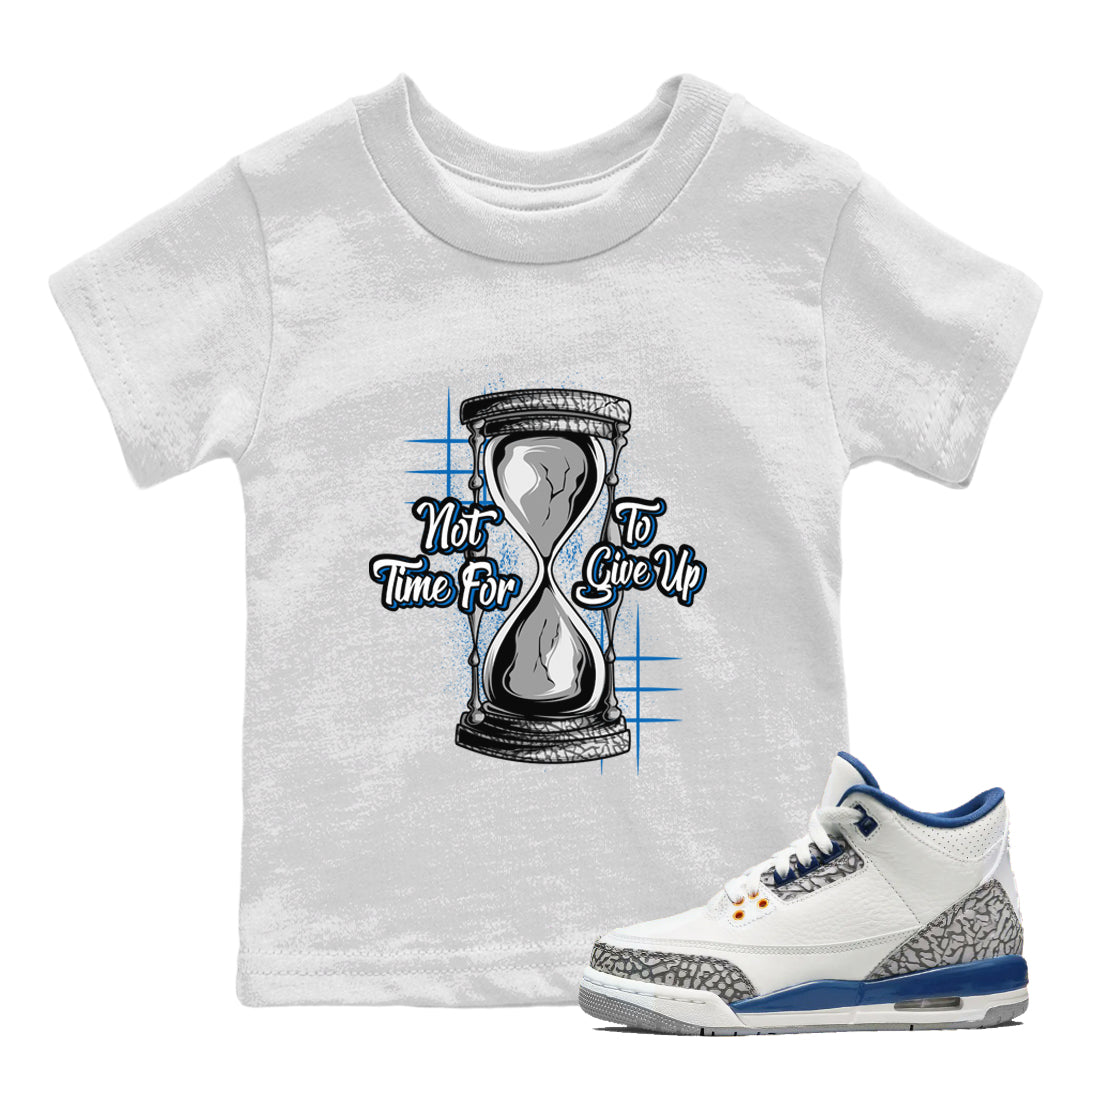 Air Jordan 3 Wizards Sneaker Match Tees Not Time For To Give Up Sneaker Tees Air Jordan 3 Wizards Shirts Kids Shirts White 1